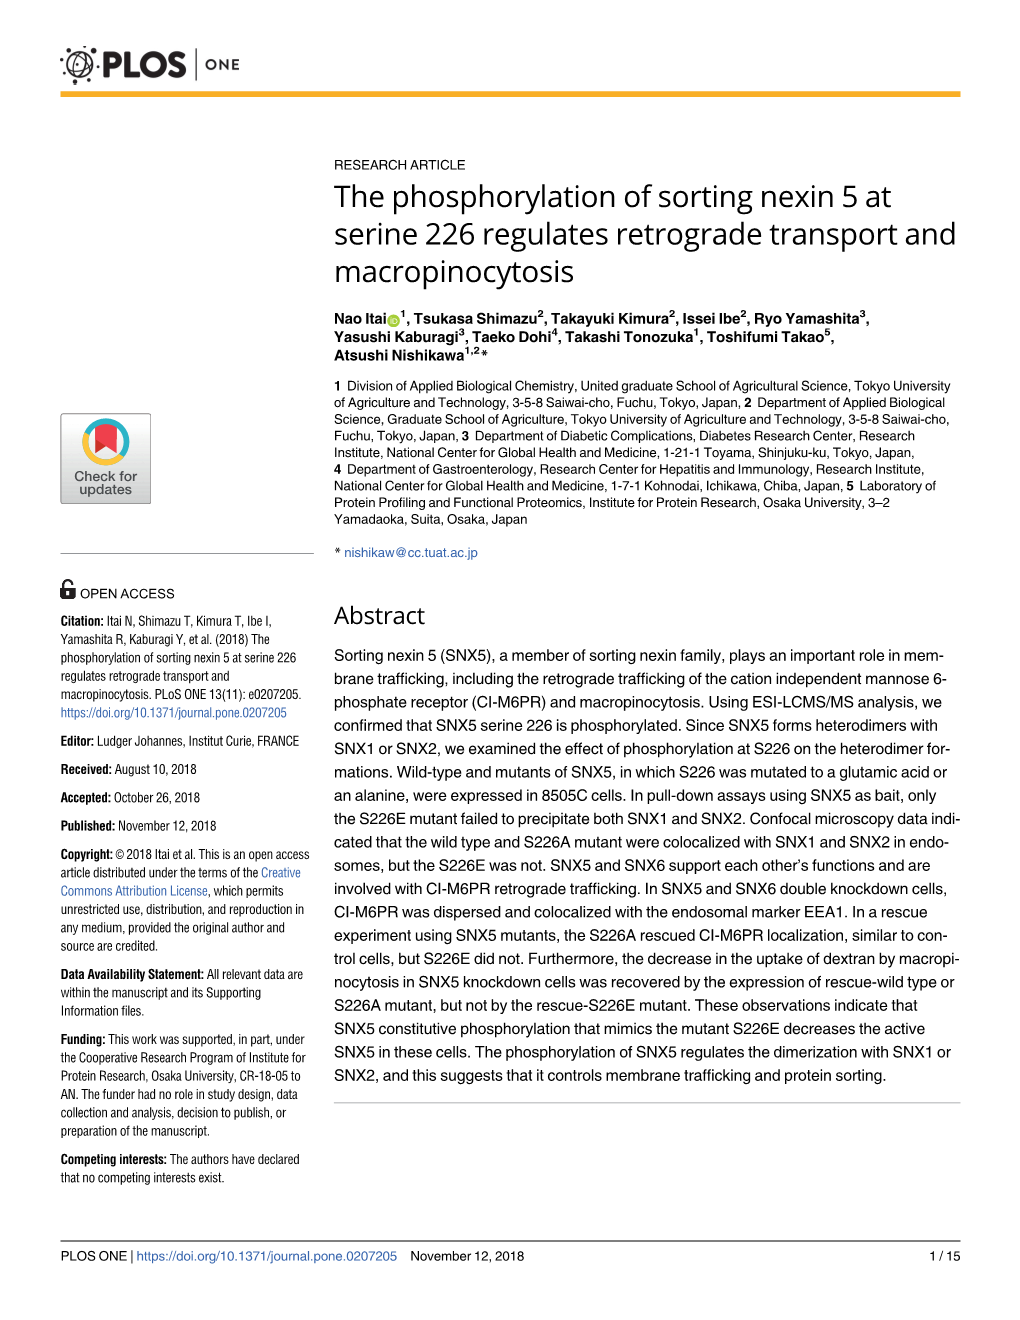 The Phosphorylation of Sorting Nexin 5 at Serine 226 Regulates Retrograde Transport and Macropinocytosis